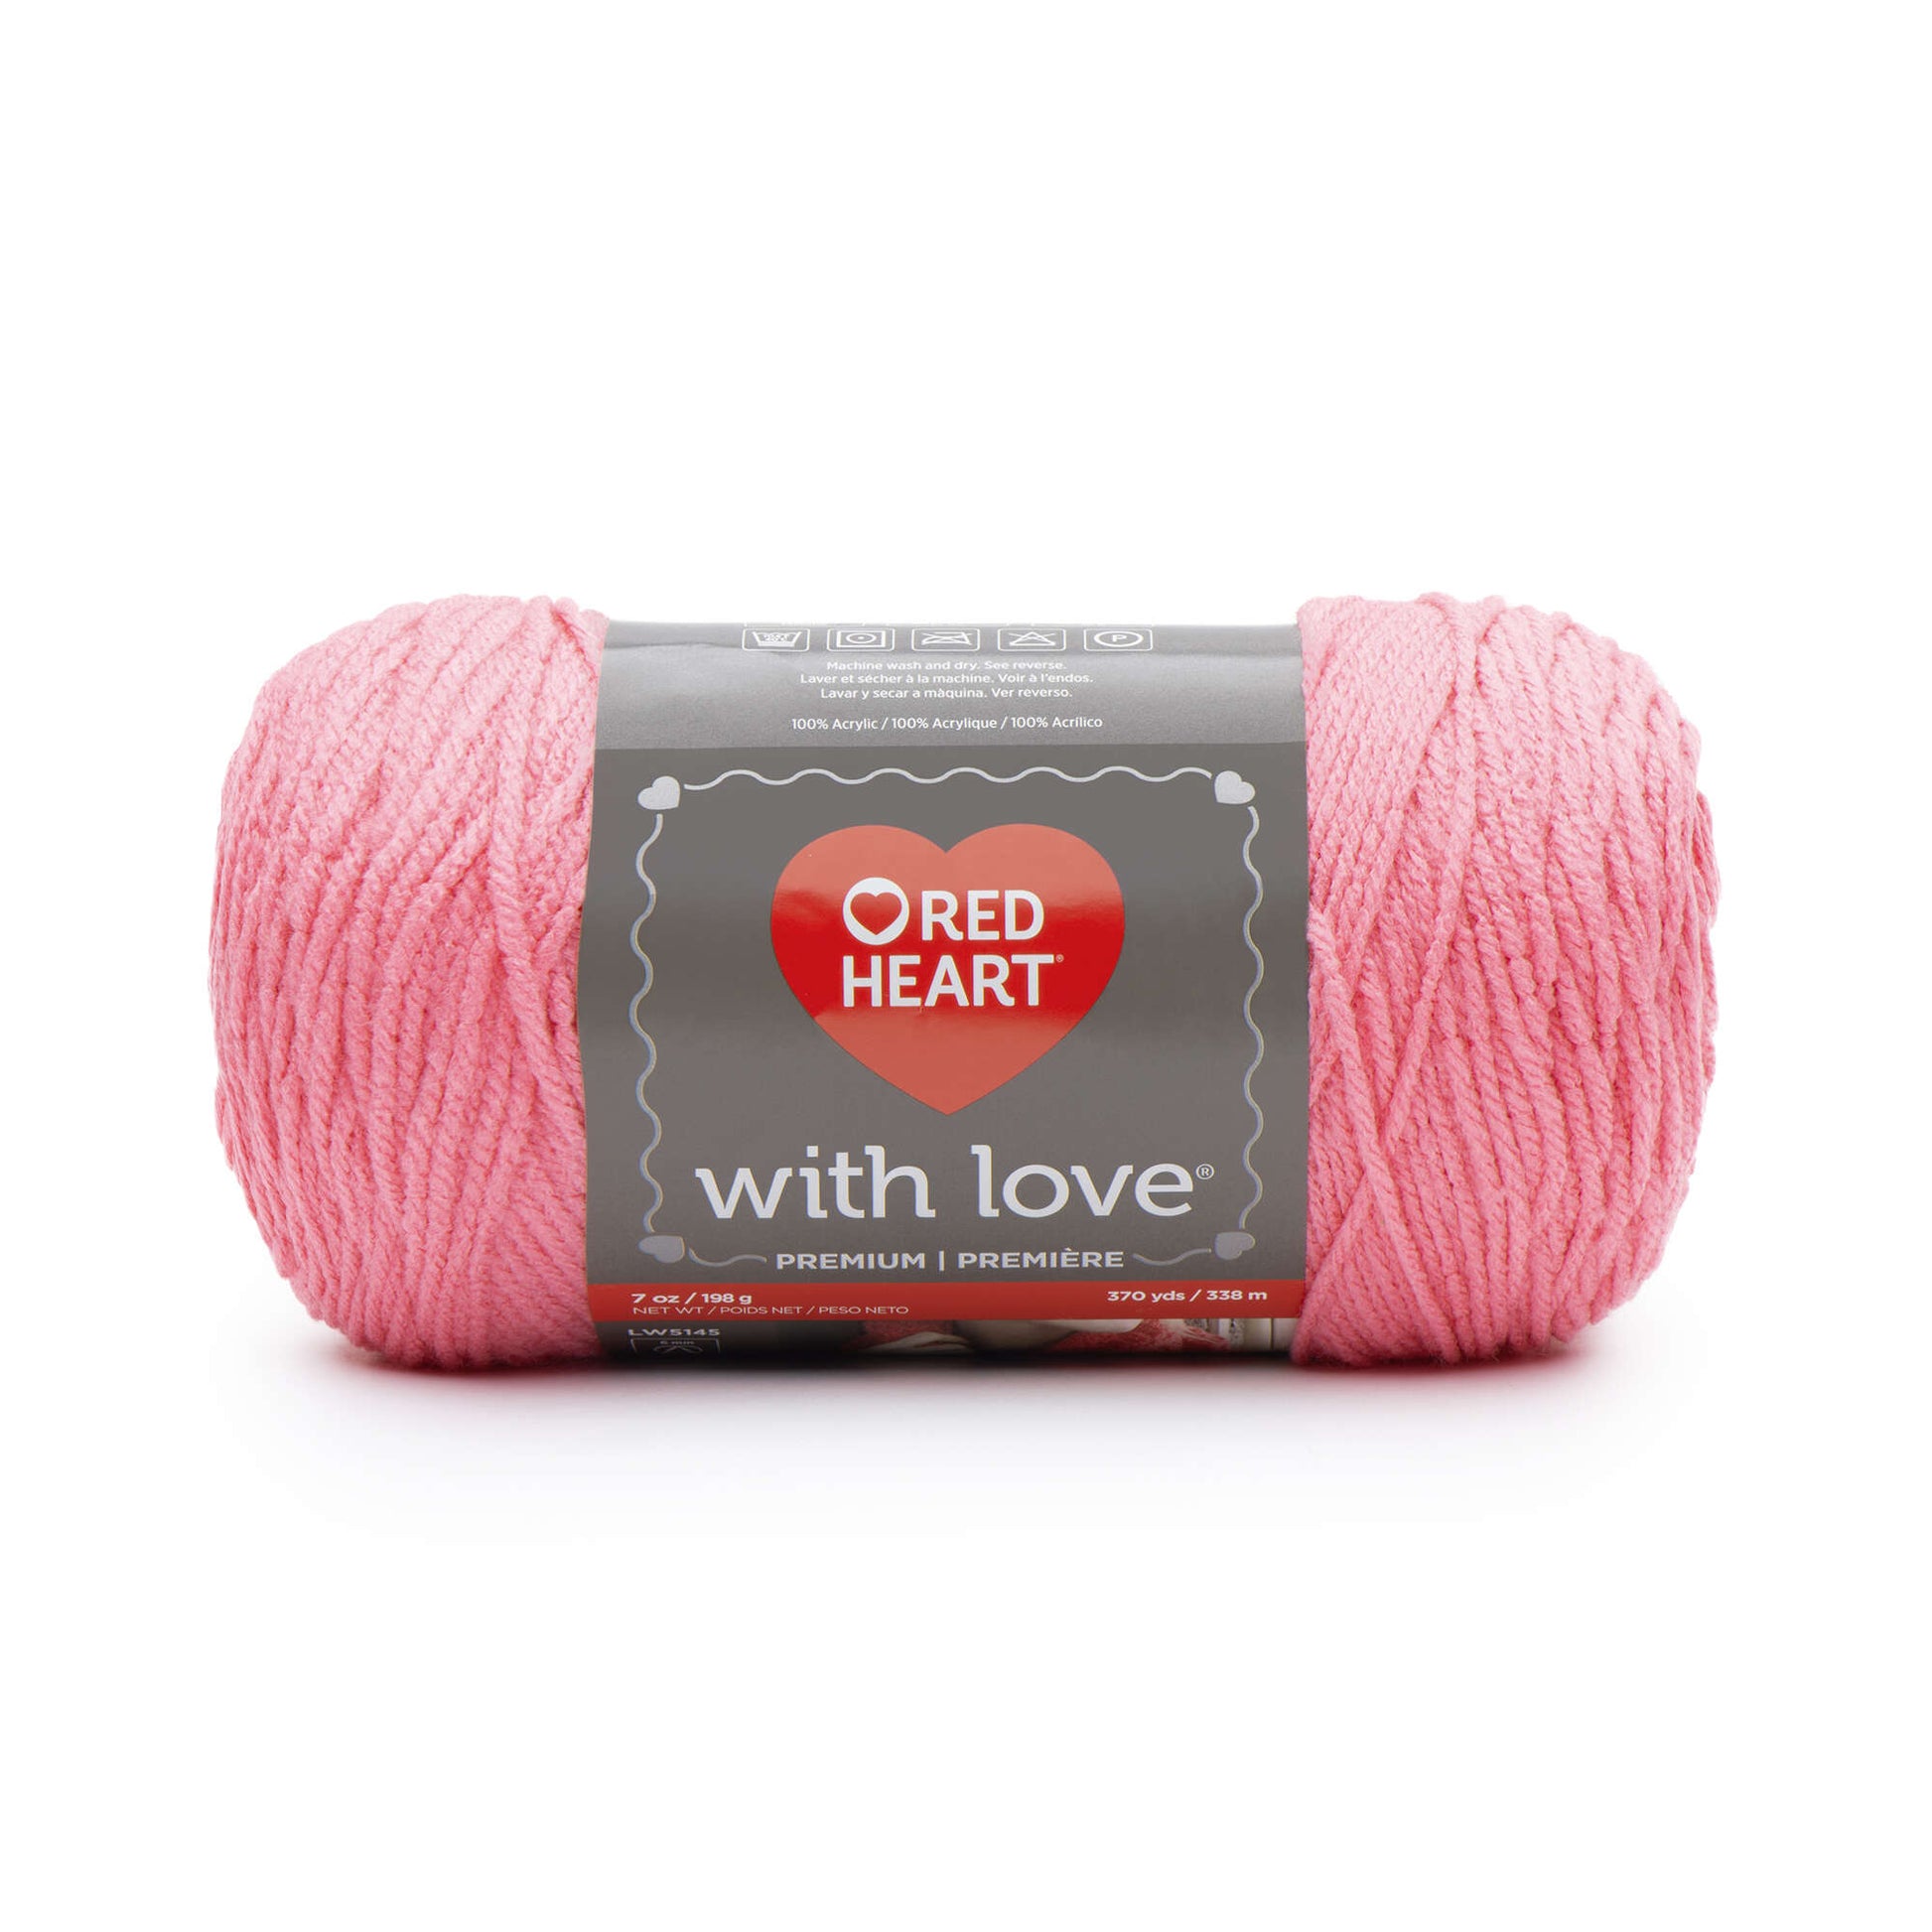 Find a yarn to love!